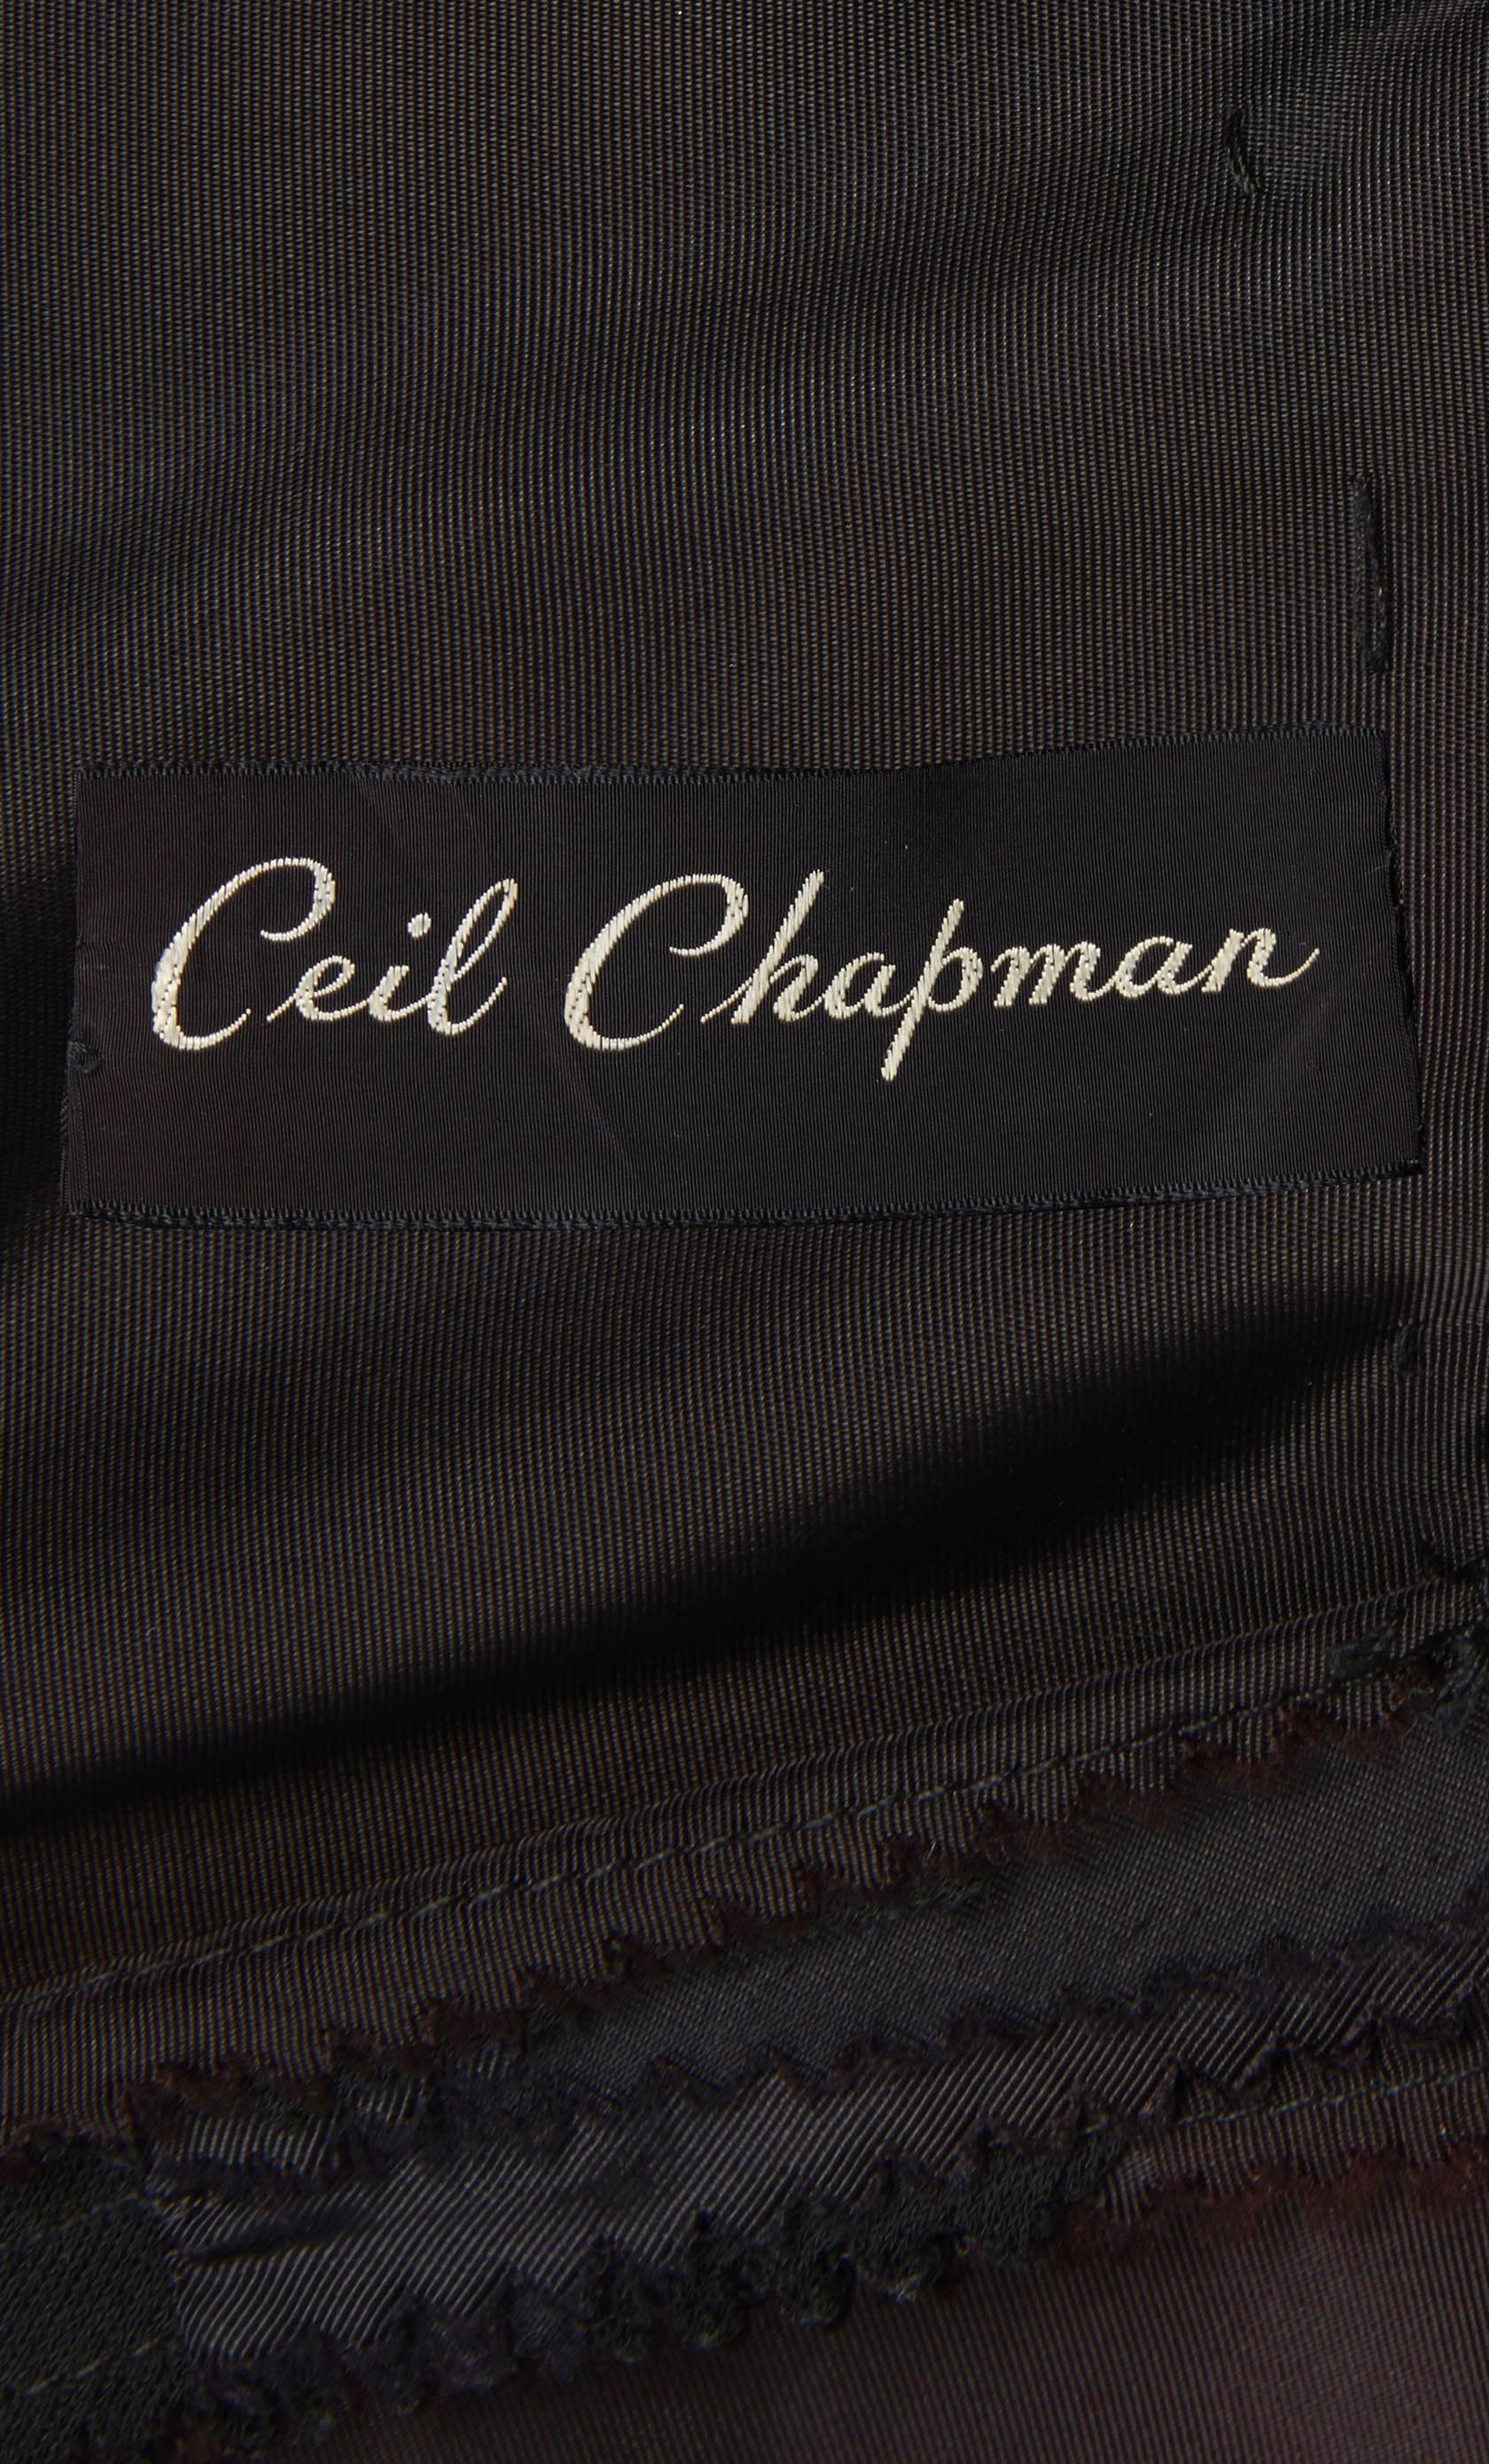 Women's Ceil Chapman black silk jersey dress, circa 1958 For Sale